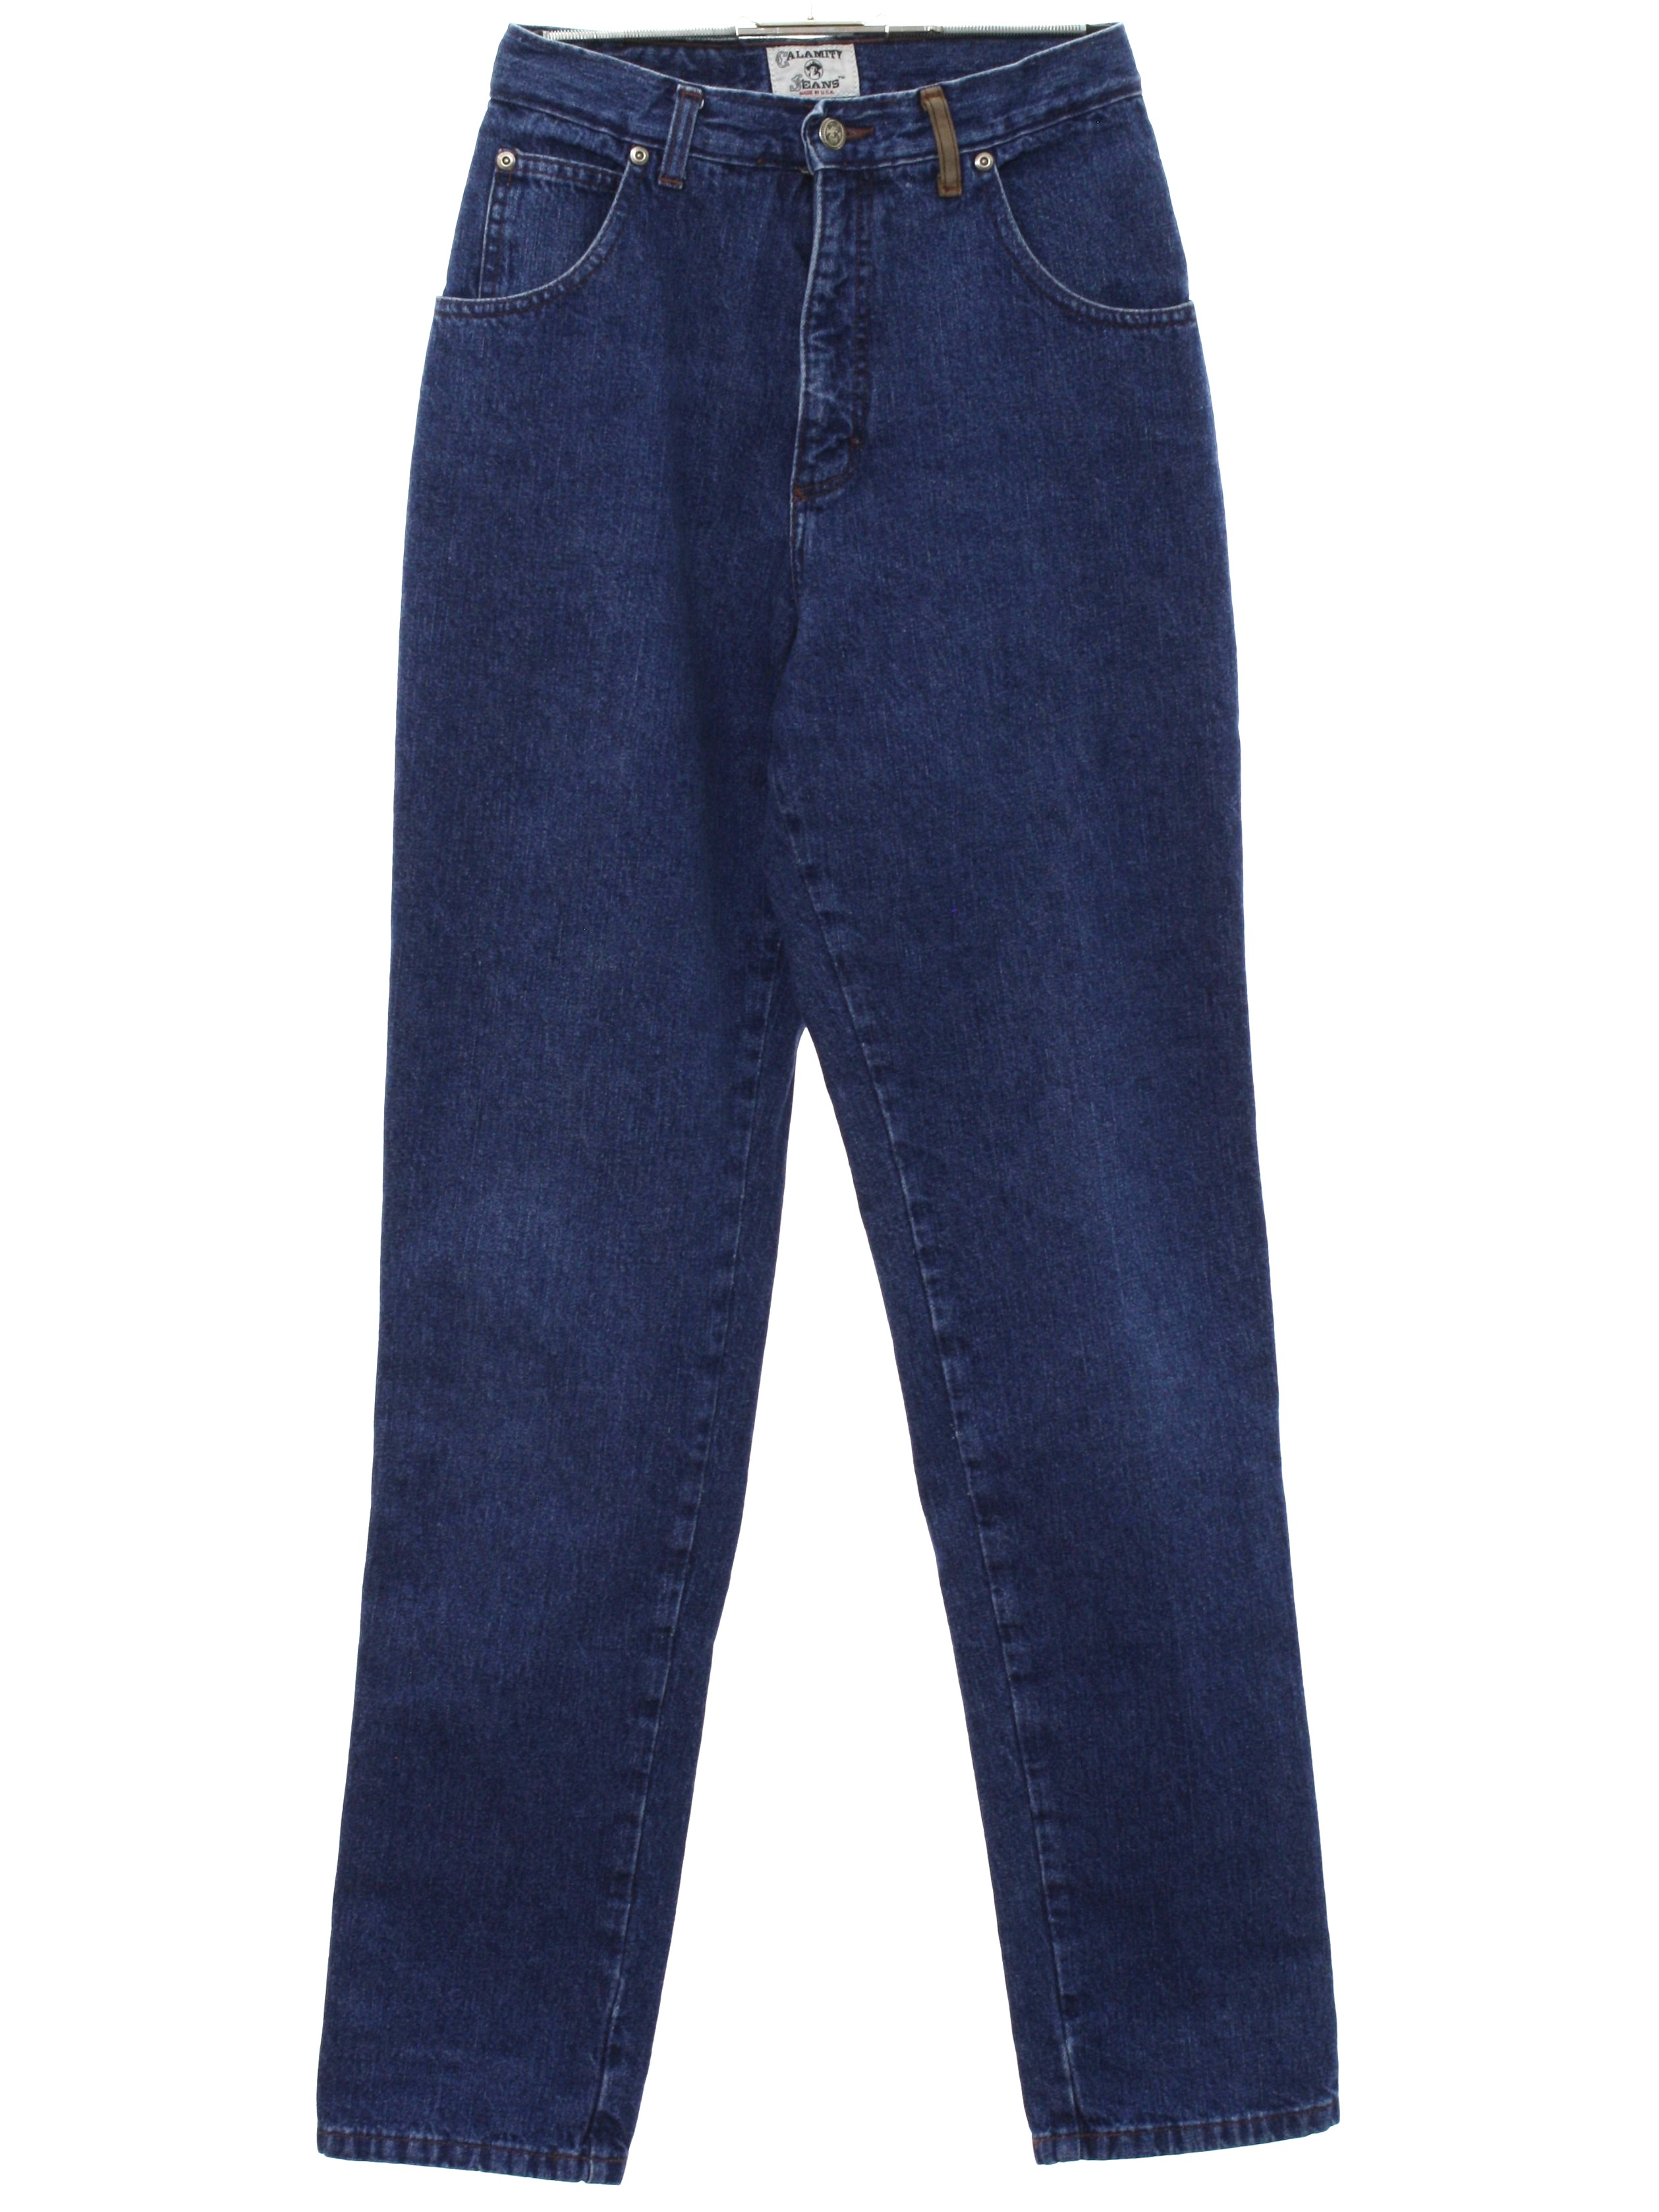 1980's Retro Pants: 80s -Calamity Jeans- Womens dark blue cotton denim ...